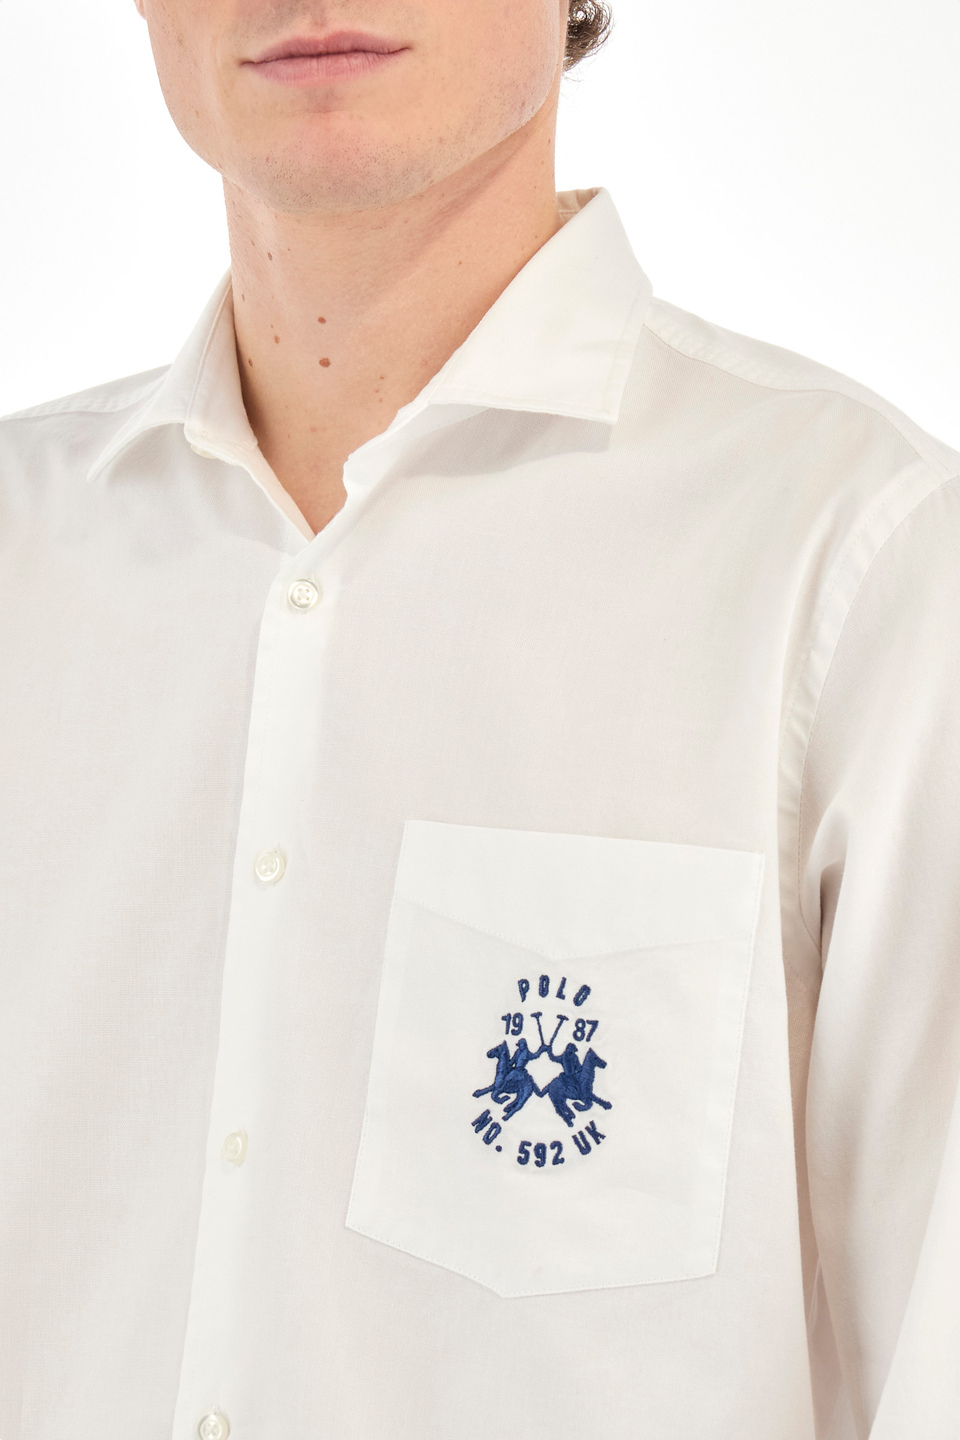 Men's shirt in a regular fit - Yamino | La Martina - Official Online Shop